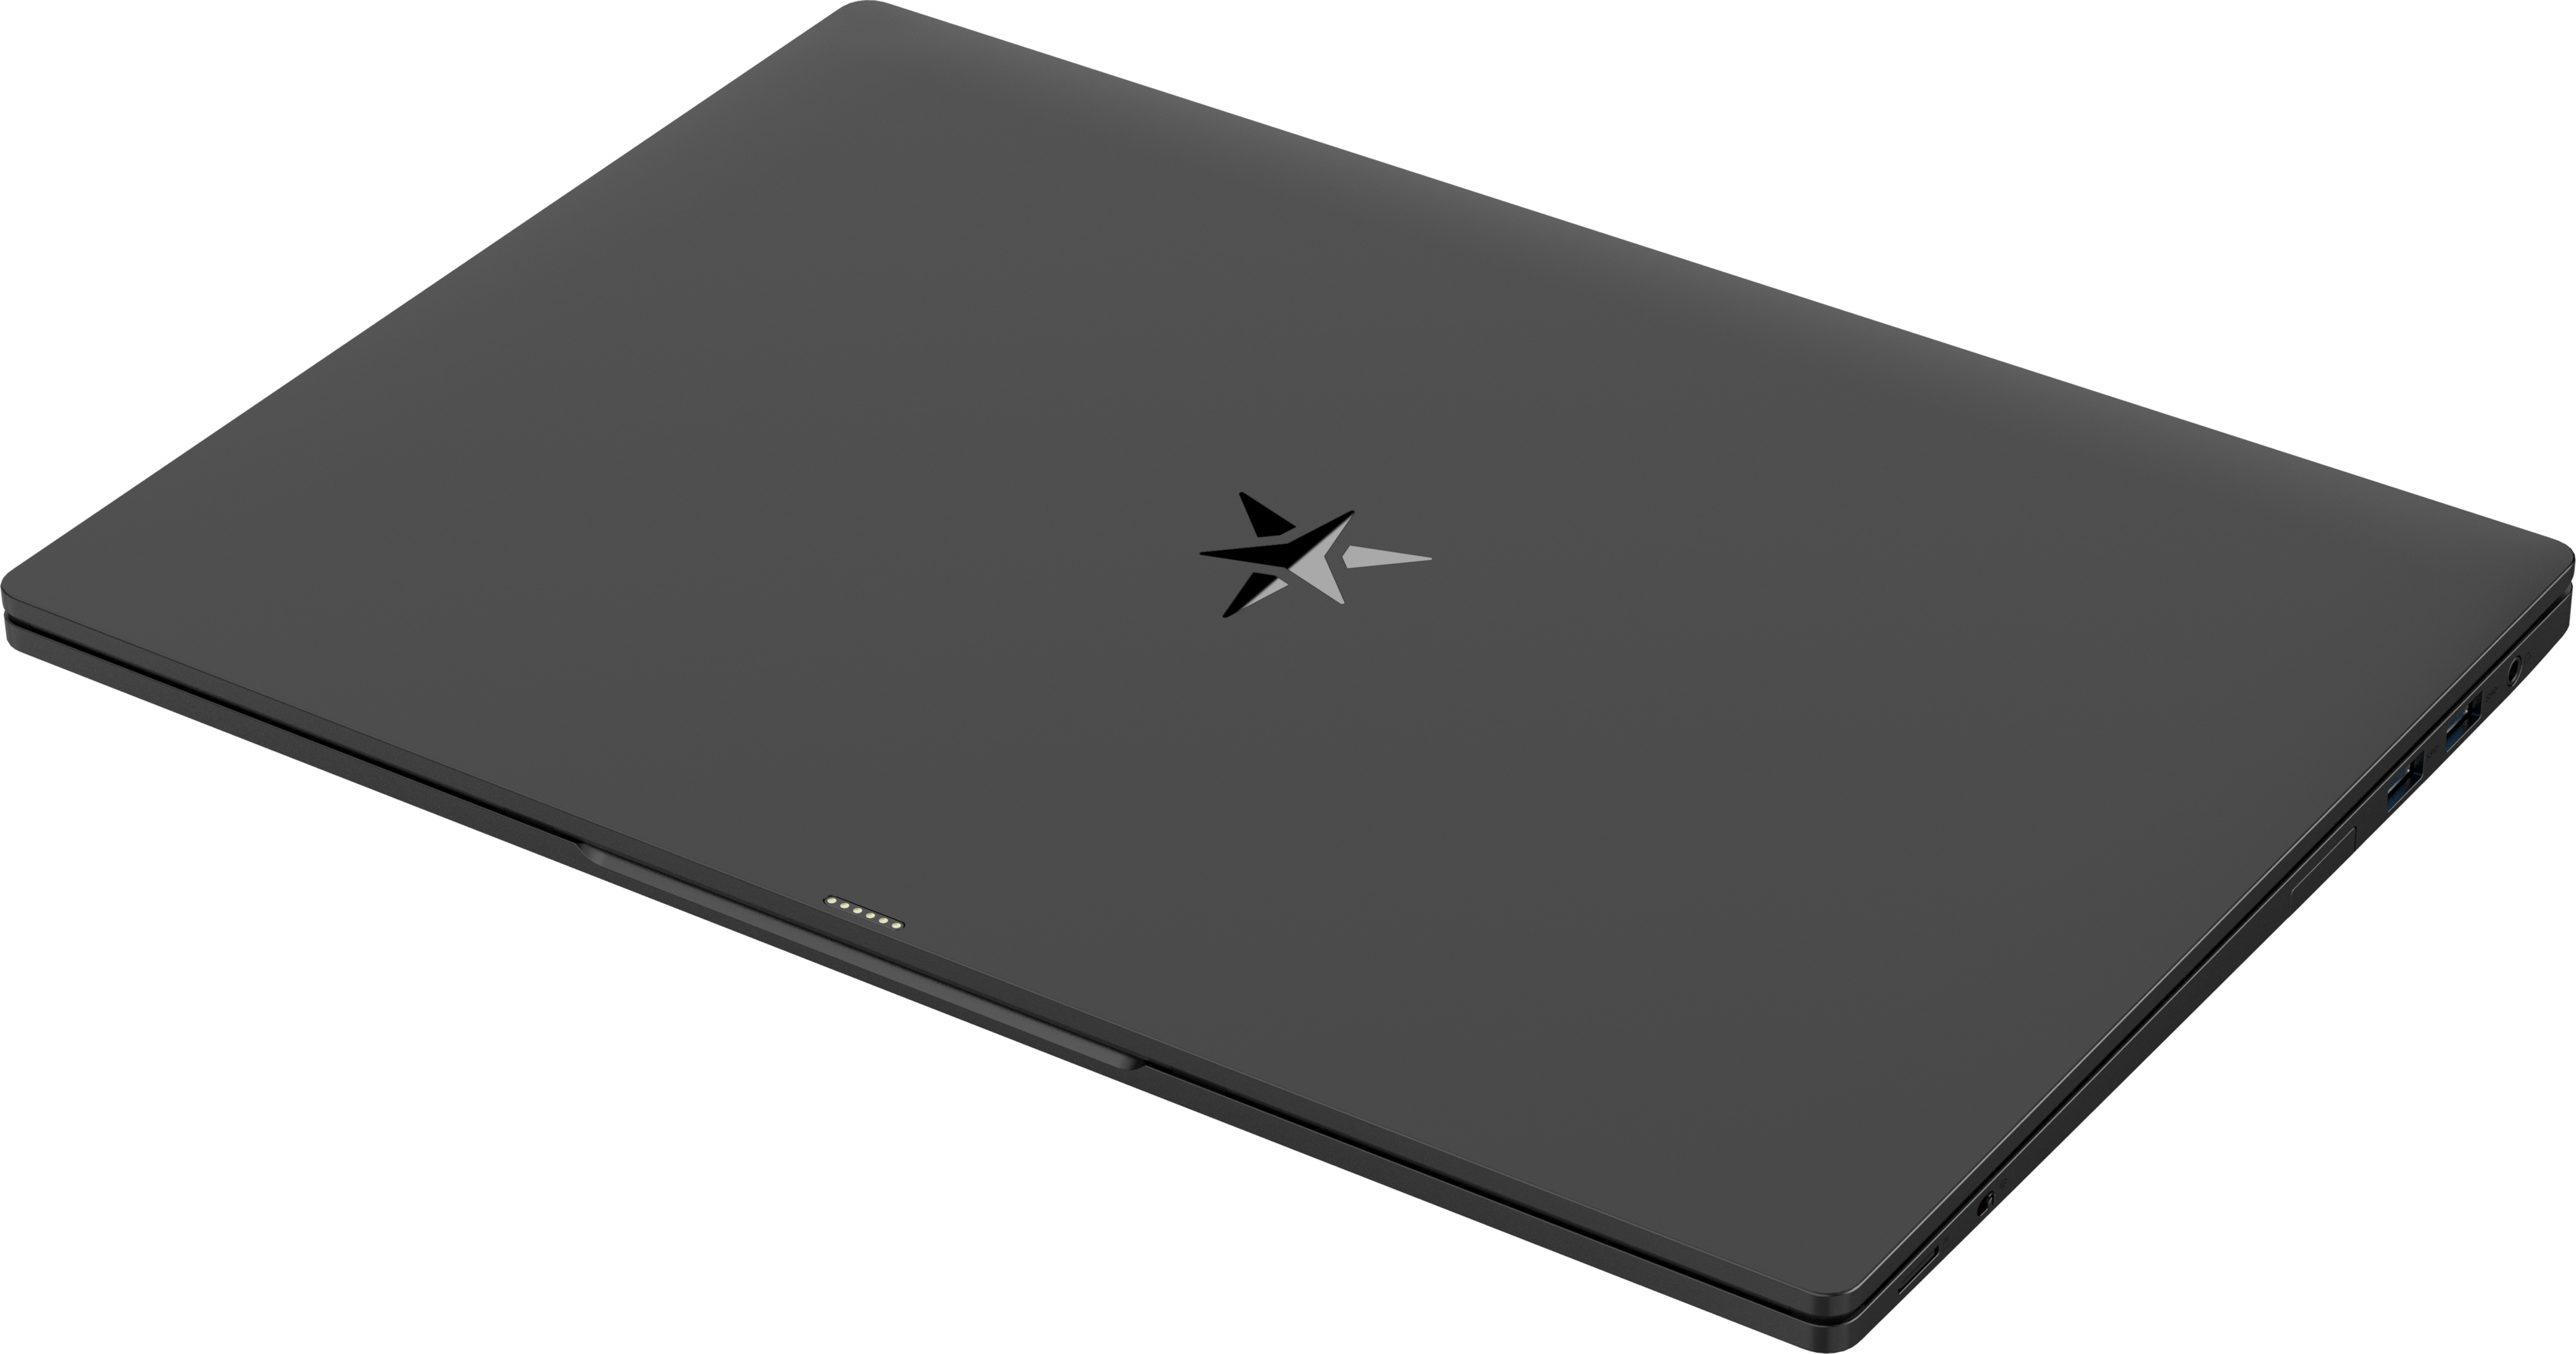 StarFighter Mk I Linux laptop